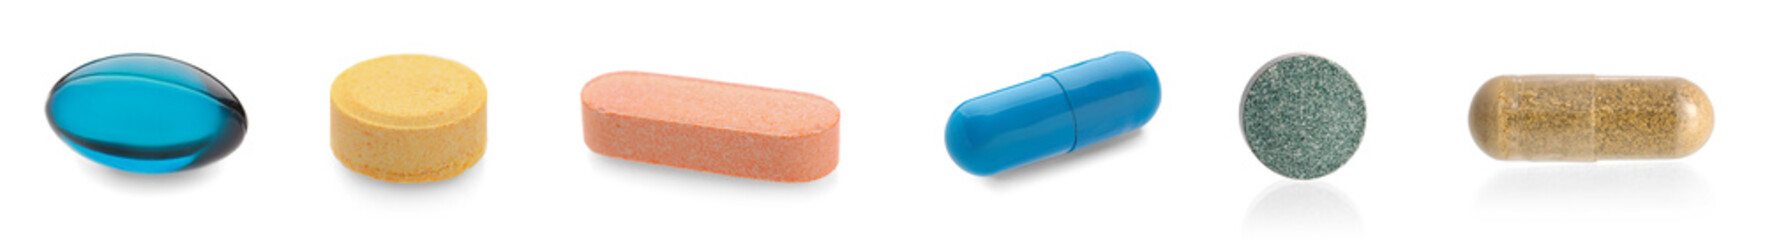 Set of many pills isolated on white